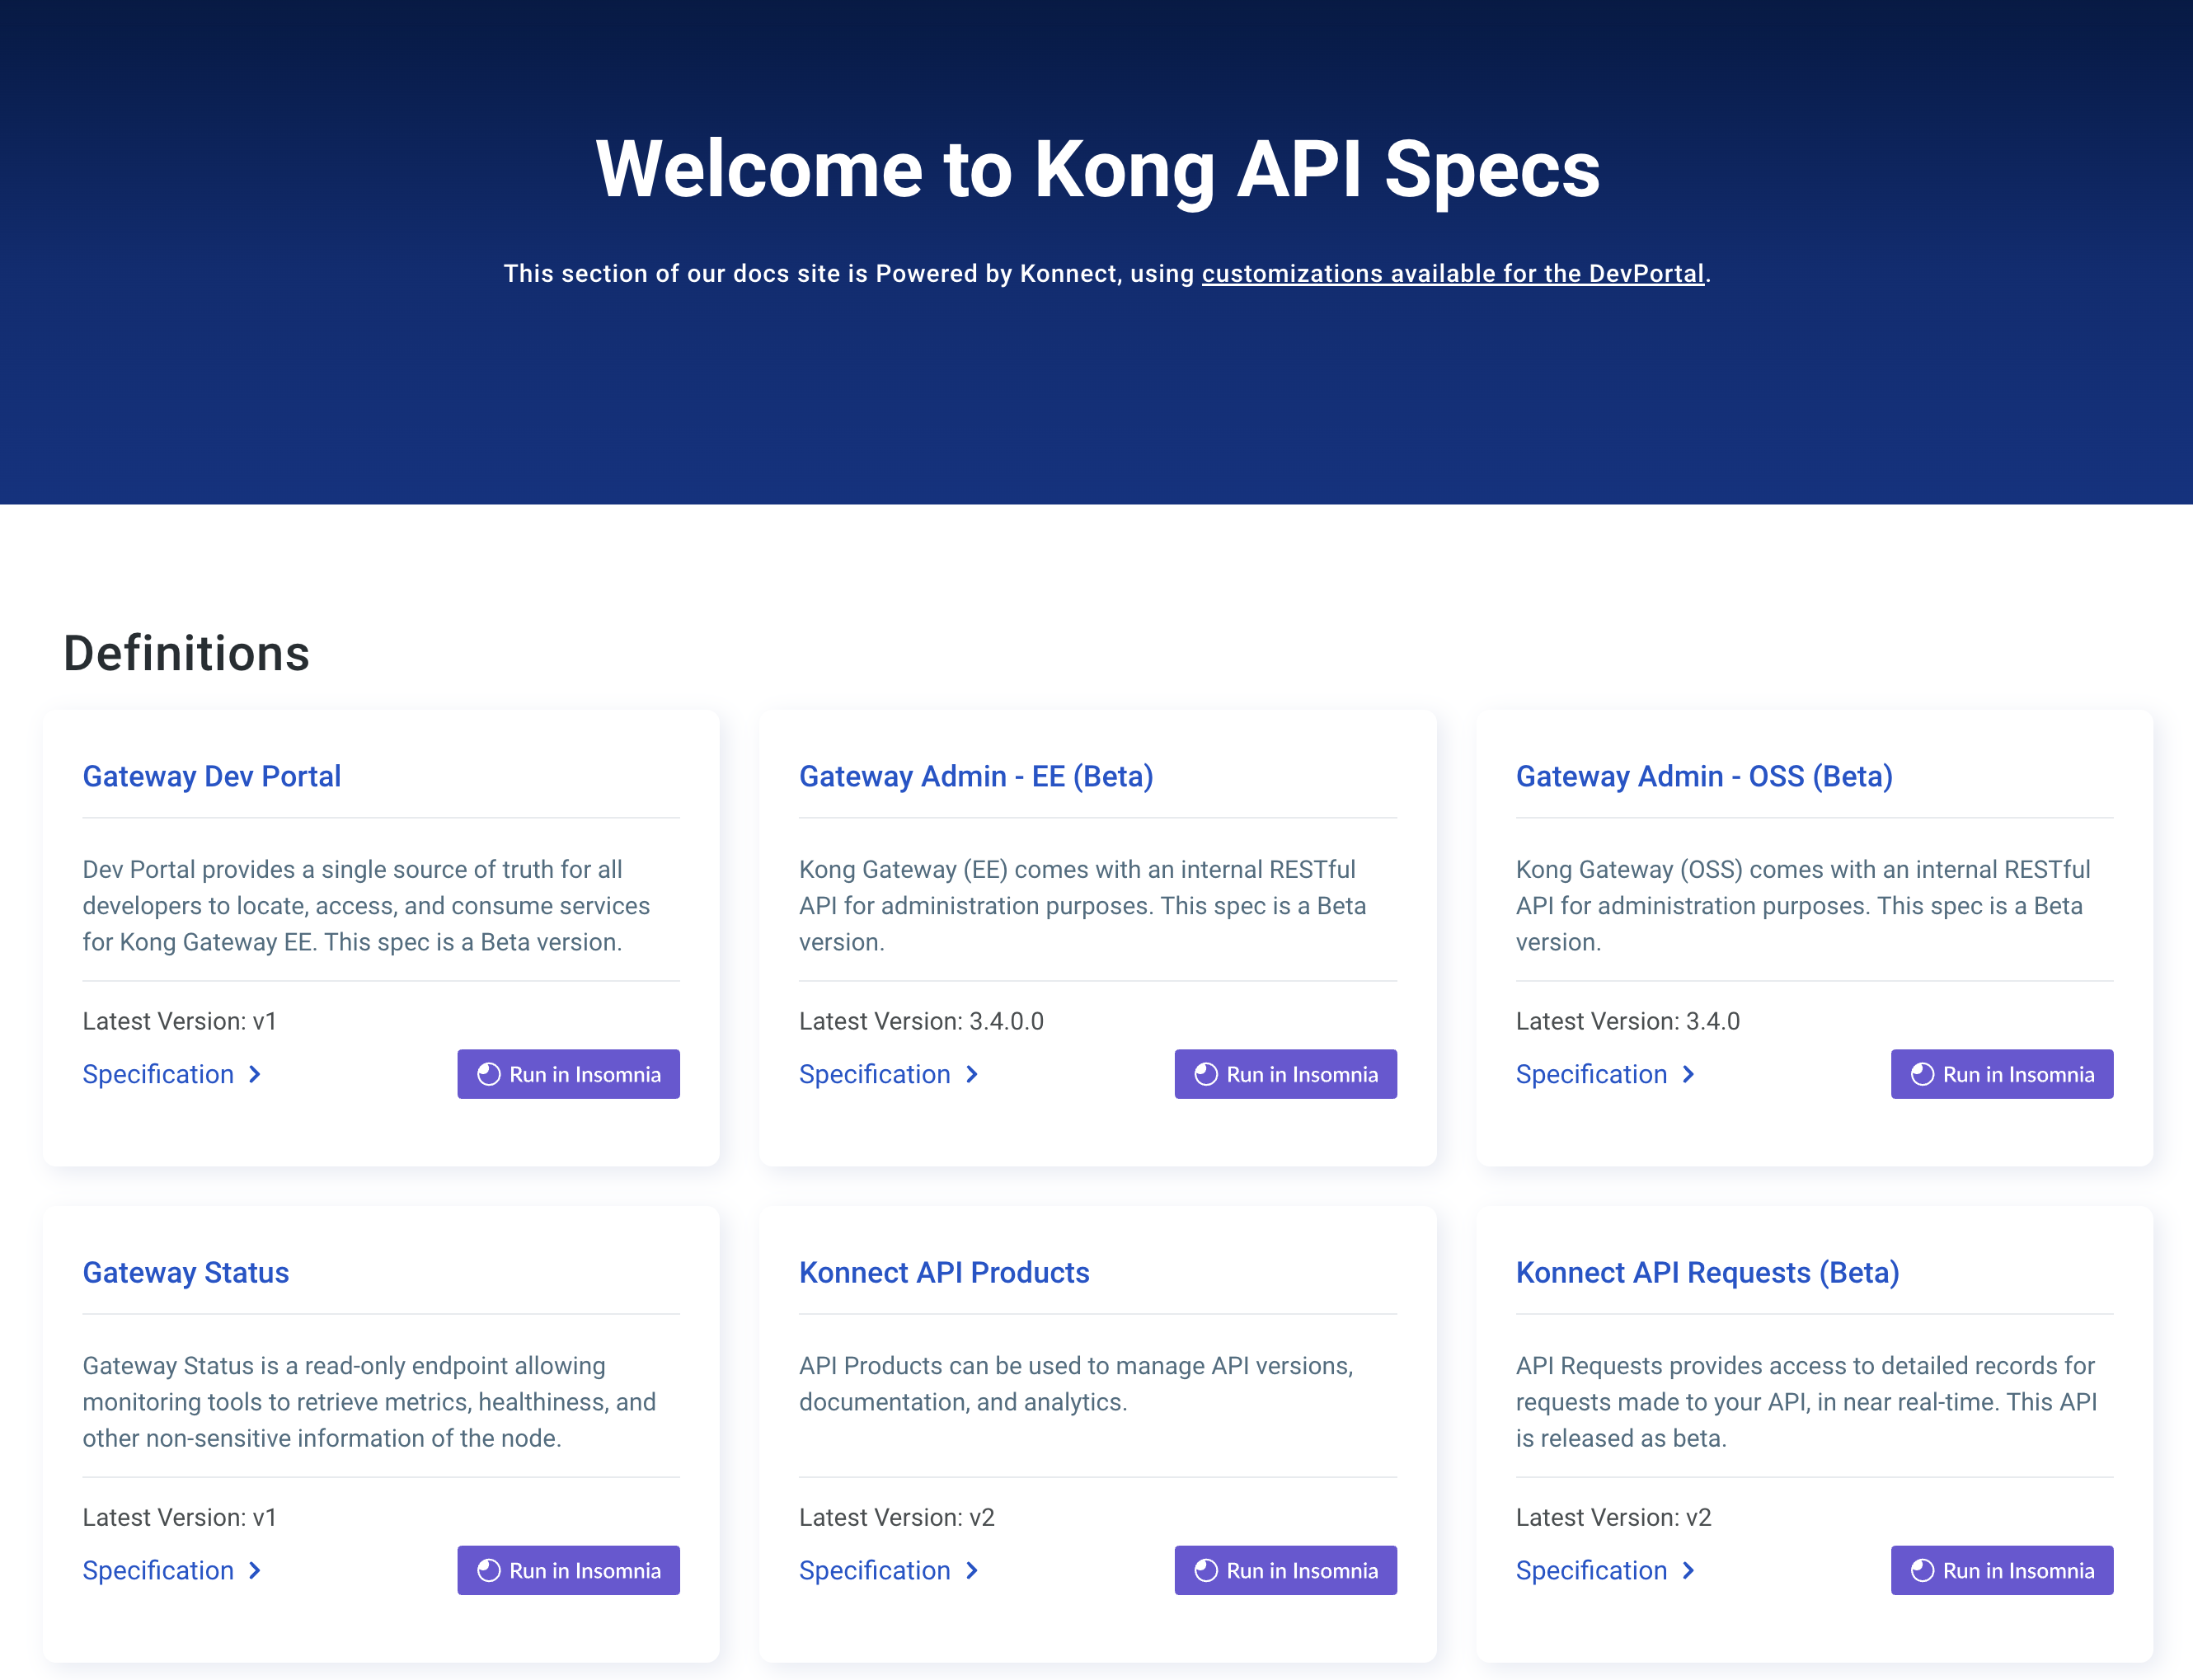 View all API Specs